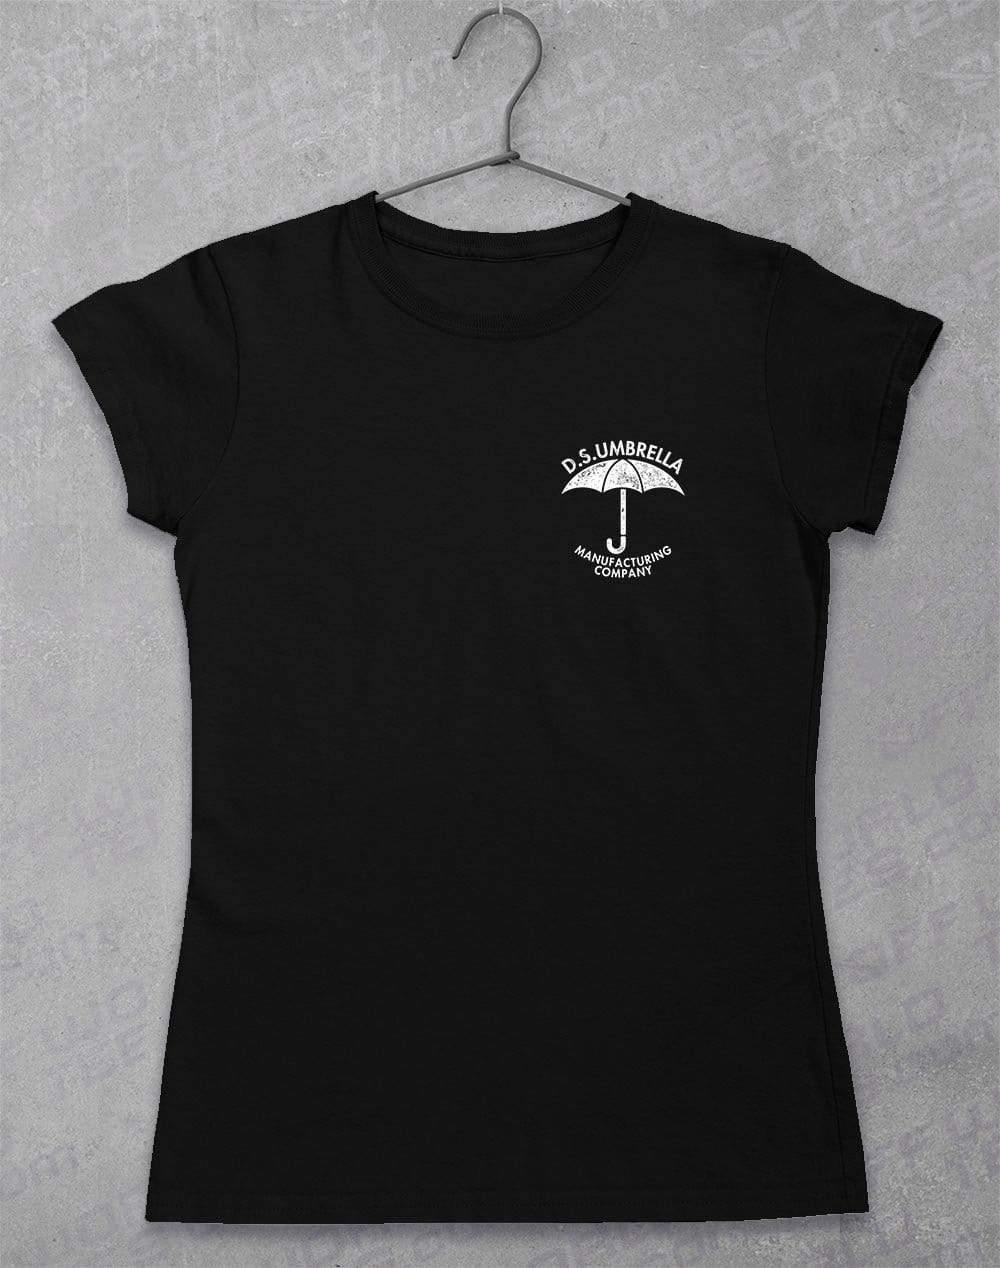 DS Umbrella - Women's T-Shirt 8-10 / Black  - Off World Tees